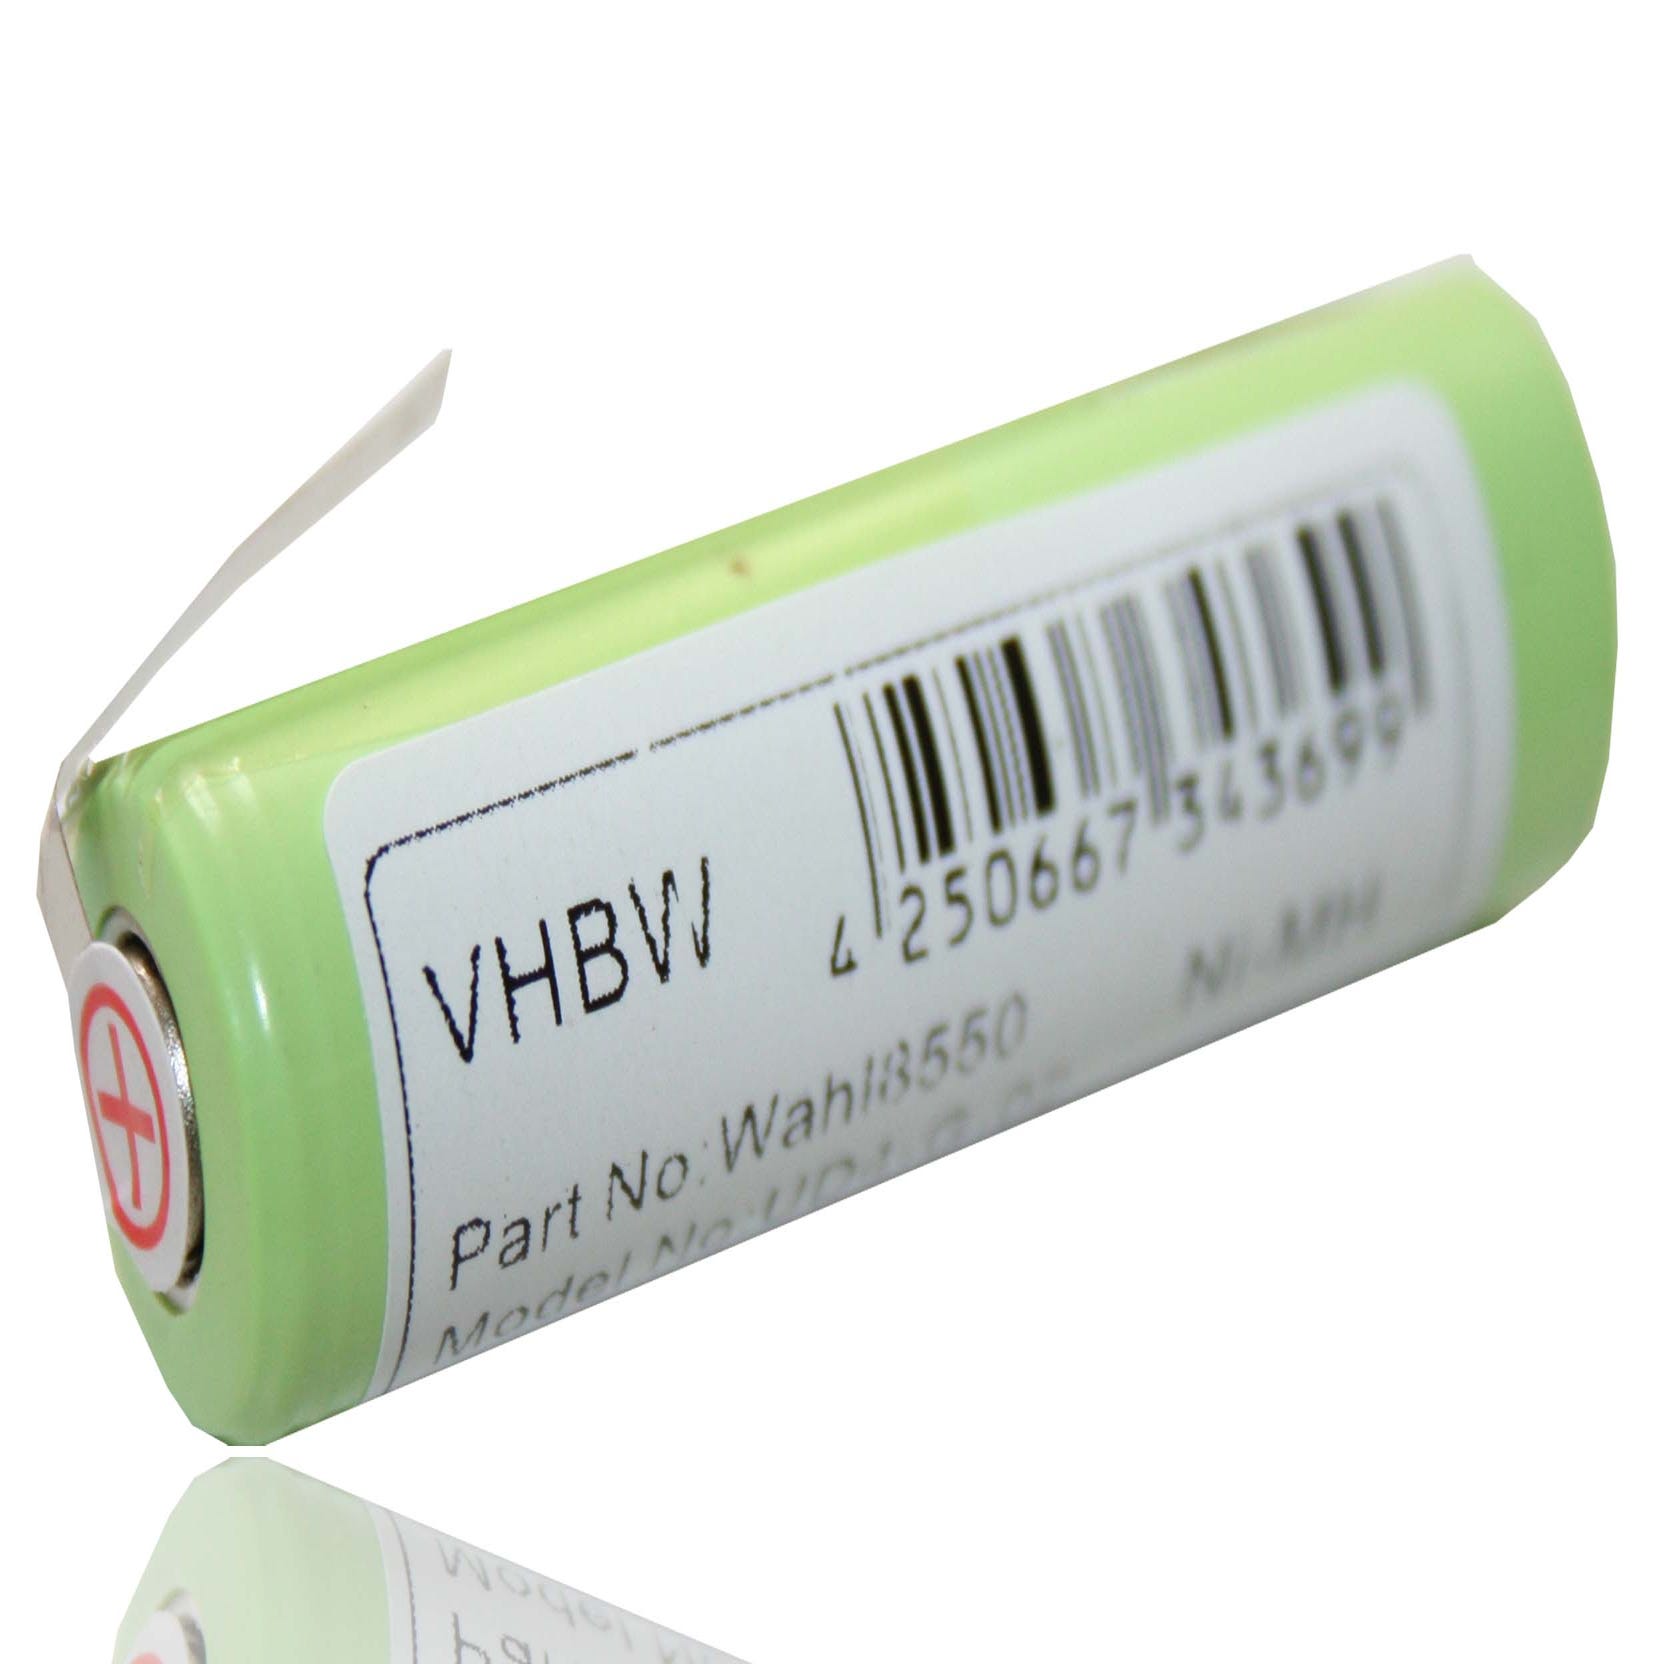 Vhbw batteria compatibile con Remington R851, R856, R860, R870, R875, R890,  R-9100 rasoio elettrico (2000mAh, 1,2V, NiMH)